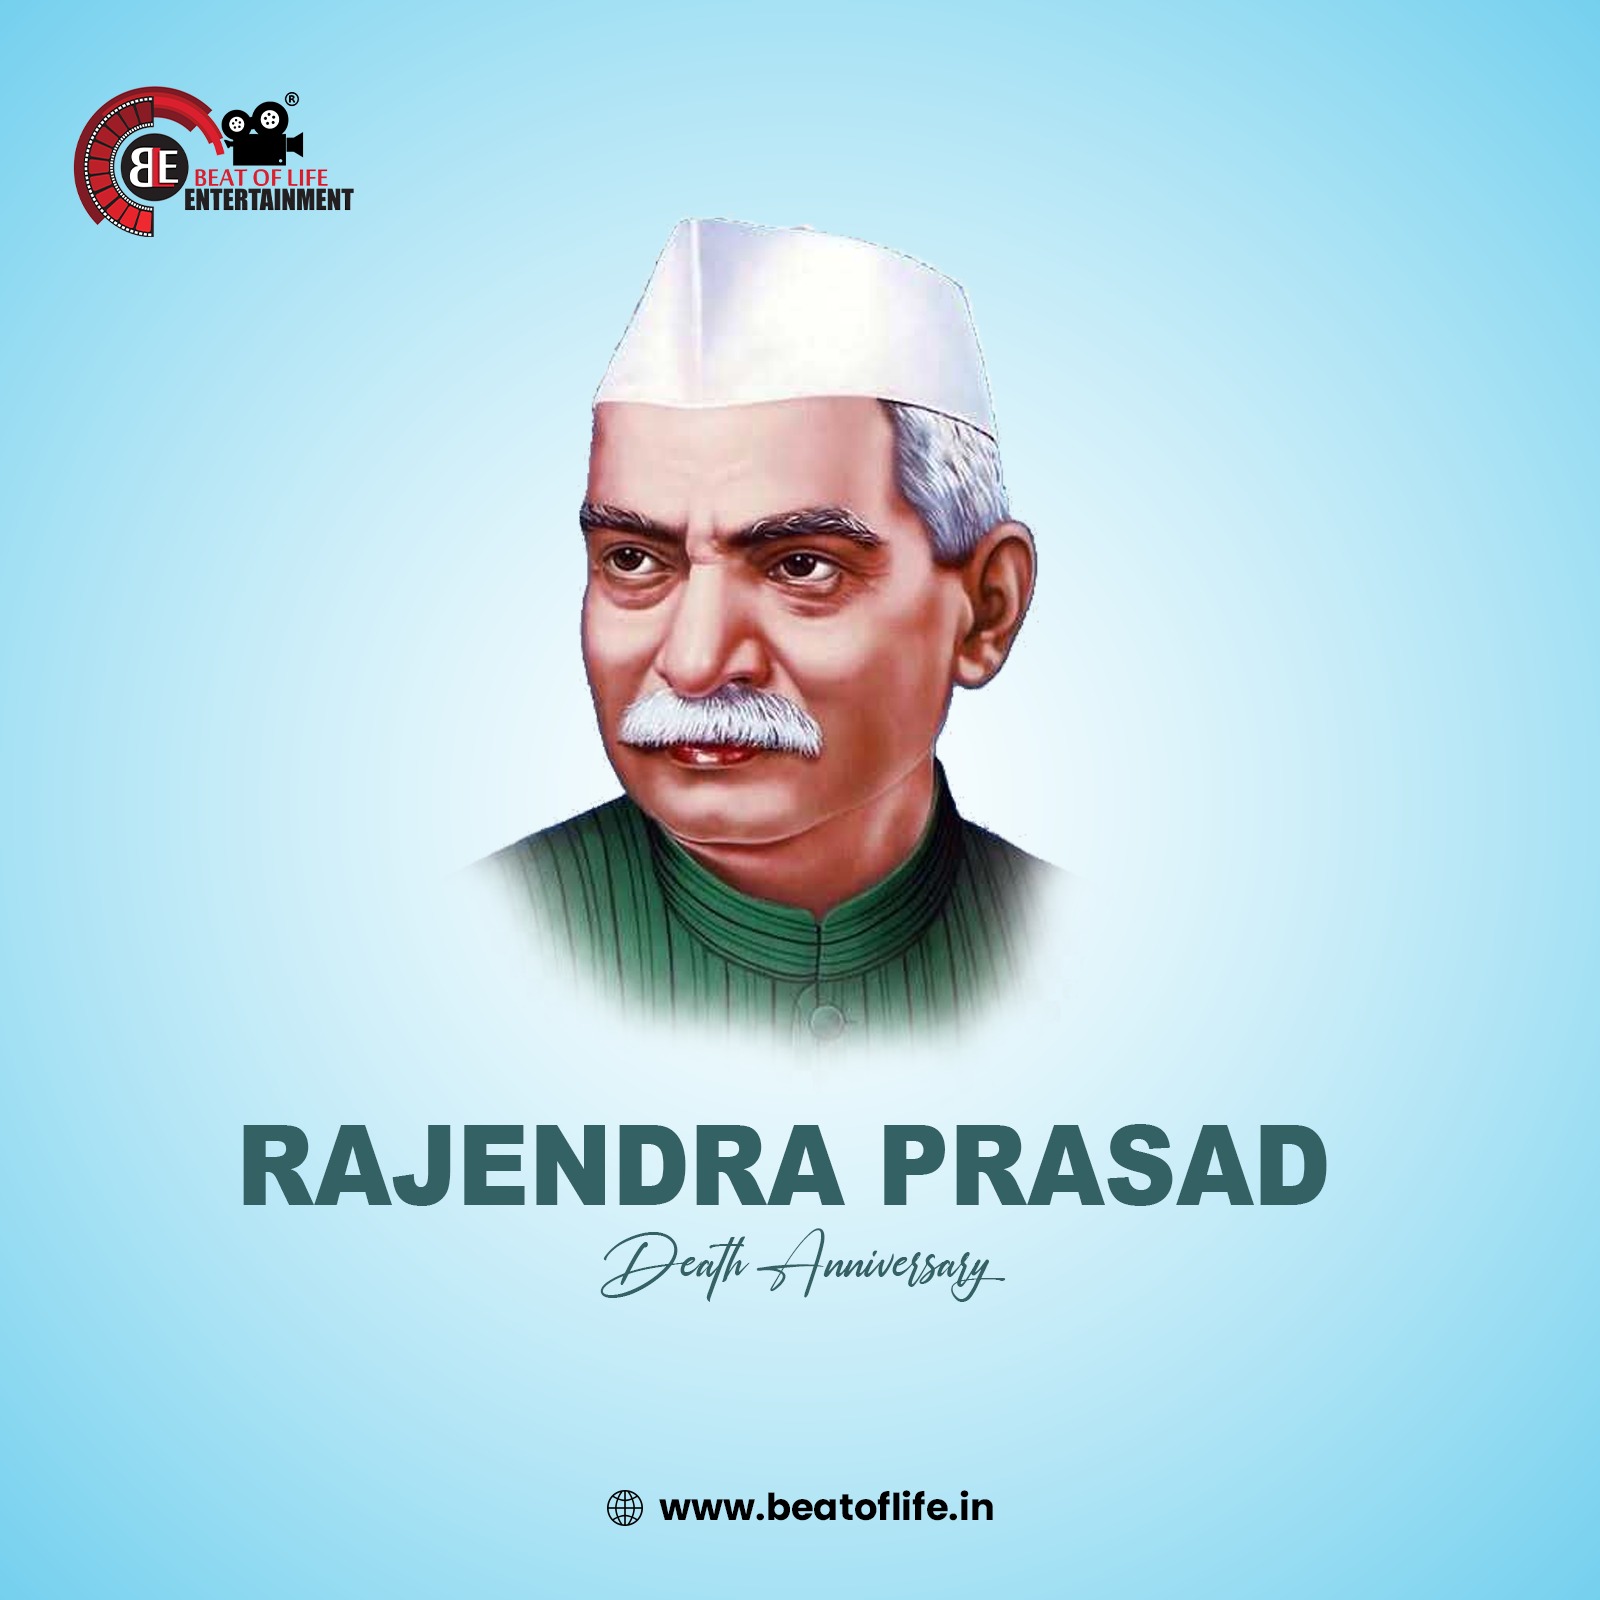 Dr. Rajendra Prasad's Death Anniversary